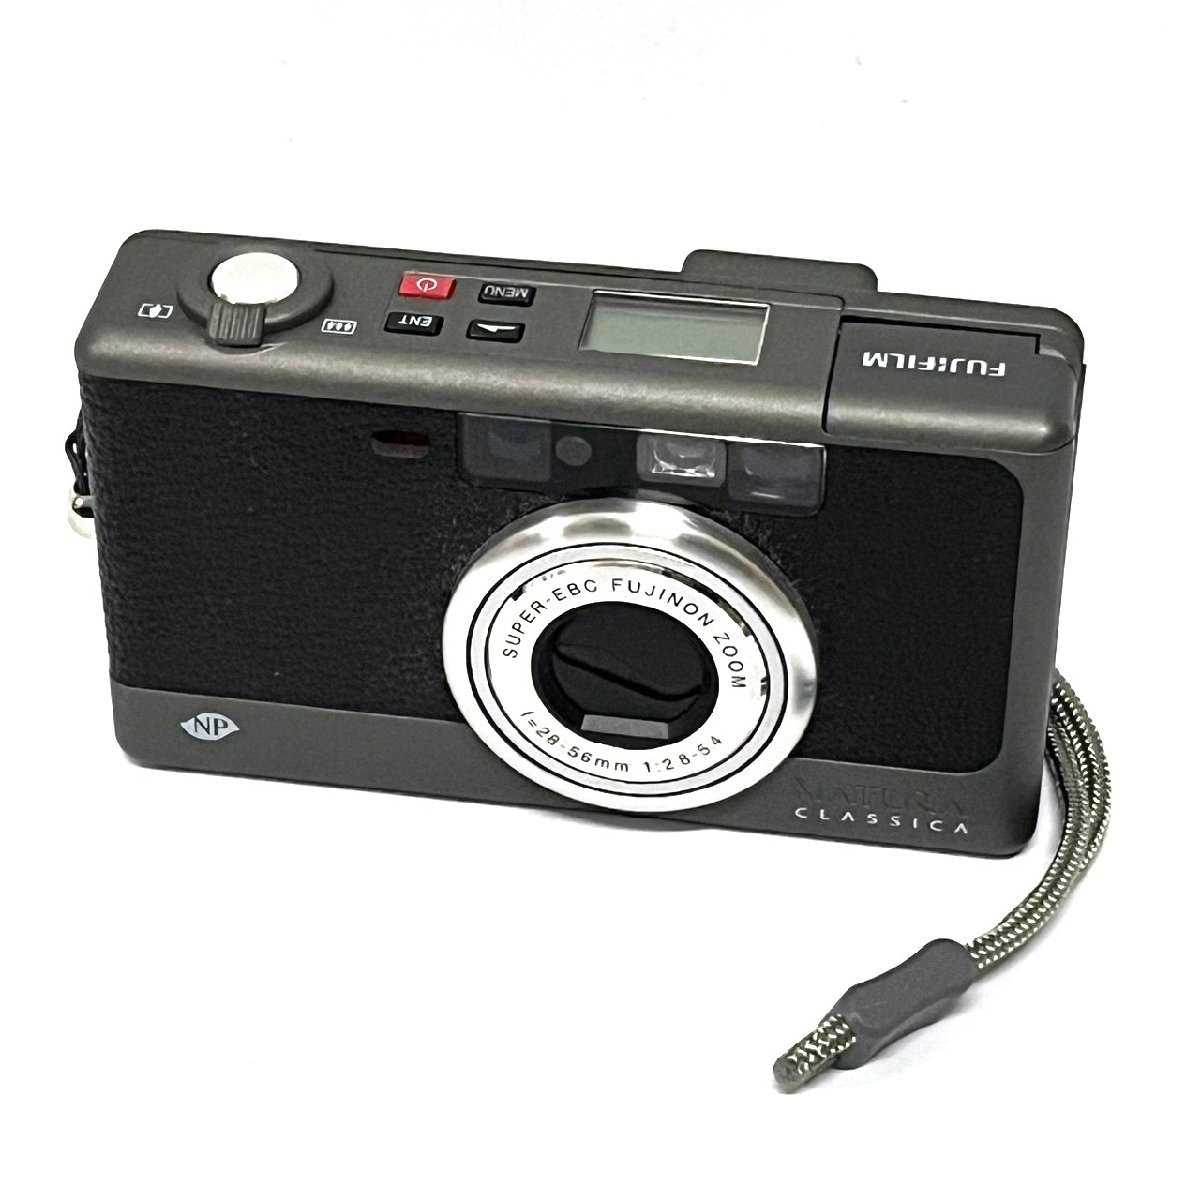 Fujifilm NATURA CLASSICA NP コンパクトフィルムカメラ